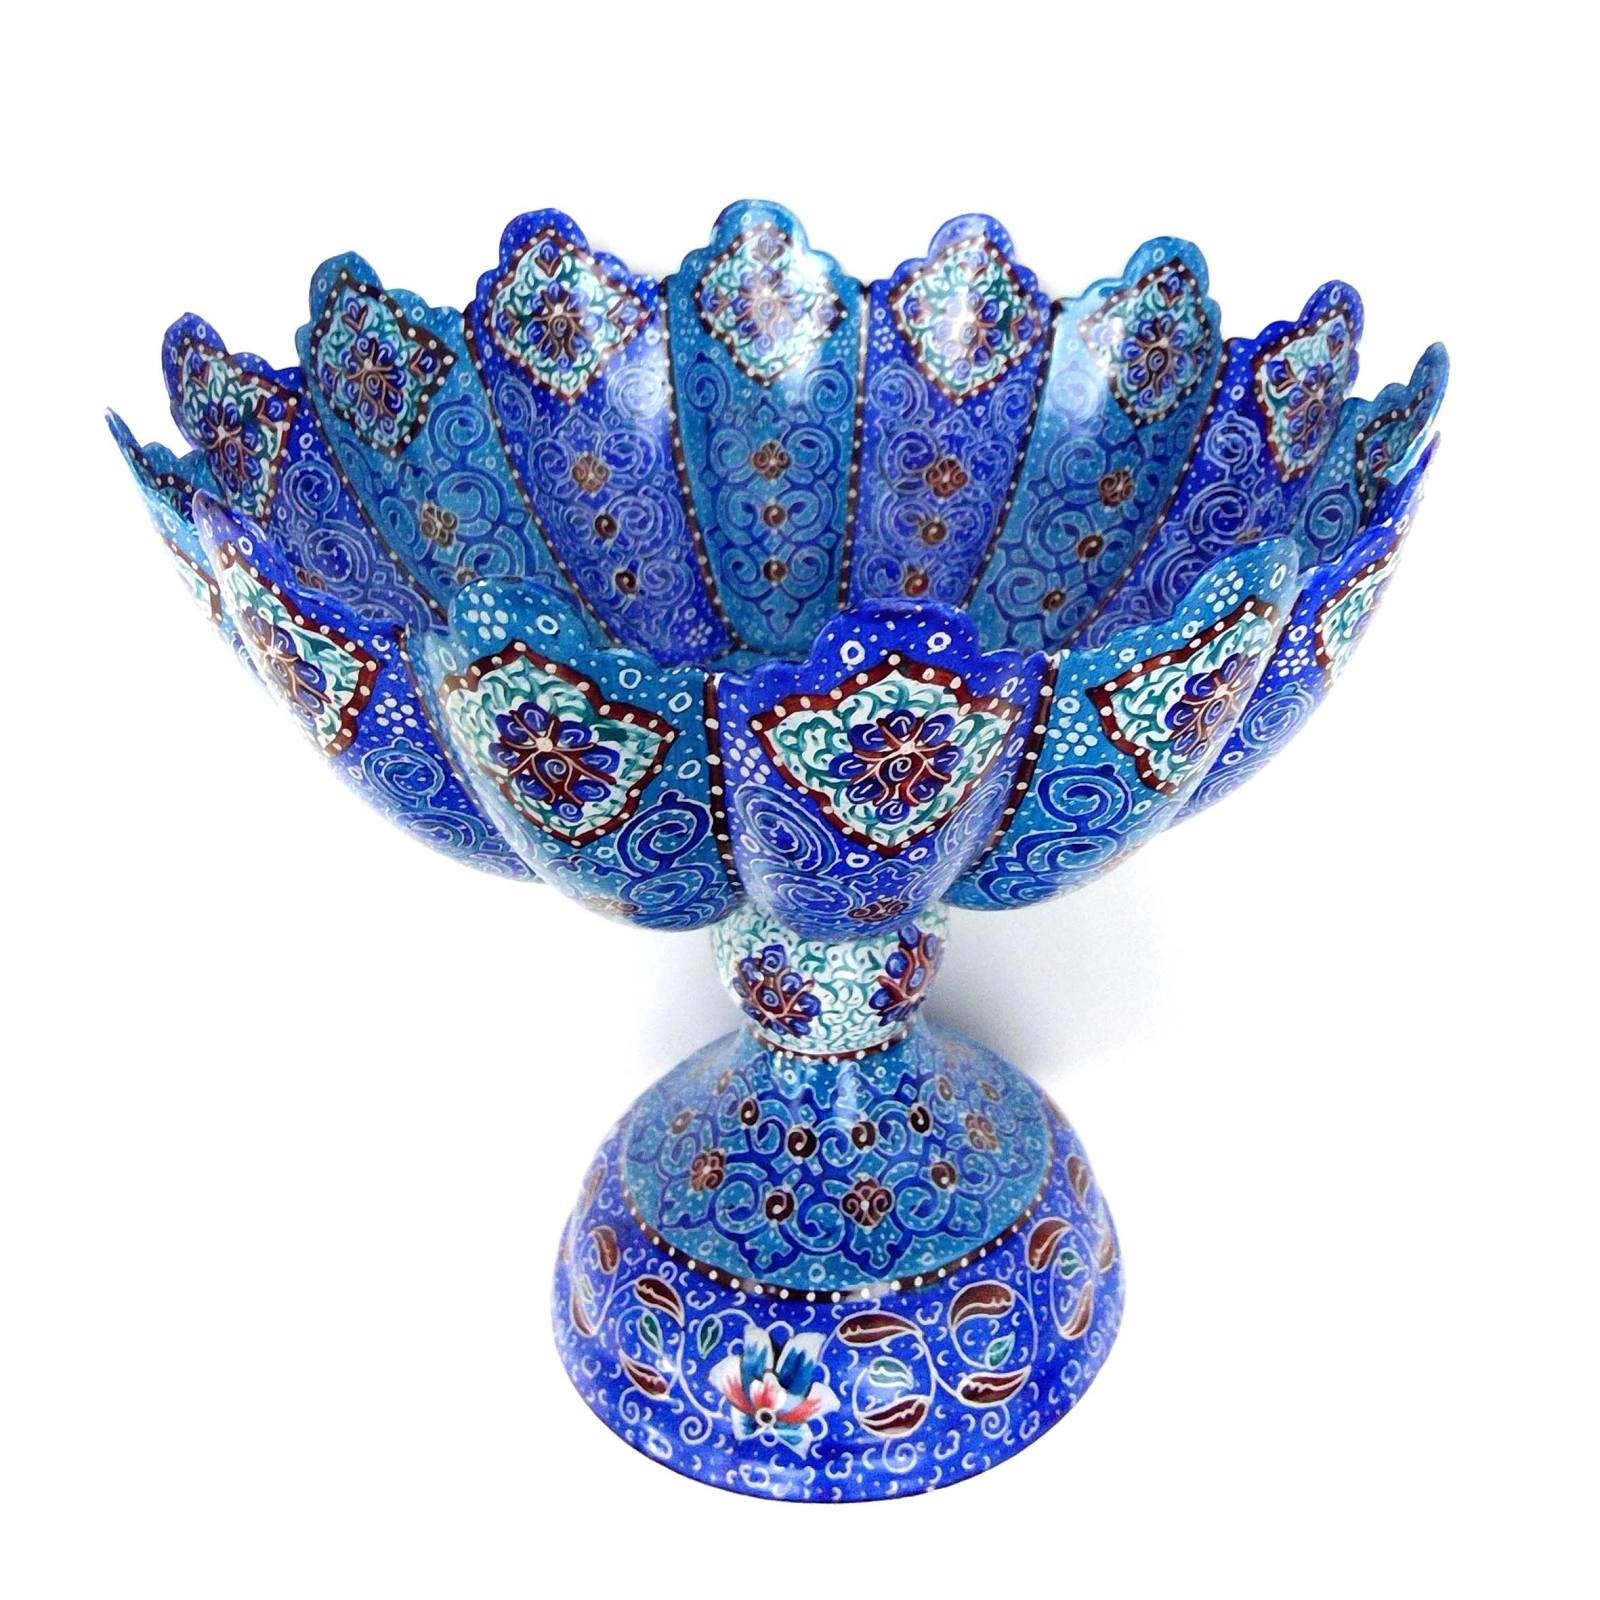 Enamel Handicraft Copper bowl payehdar model code Choco-1-4-D, हस्तनिर्मित तामचीनी, नीले तामचीनी हस्तनिर्मित, पारंपरिक तामचीनी हस्तनिर्मित, हस्तनिर्मित तामचीनी, तामचीनी की कीमत